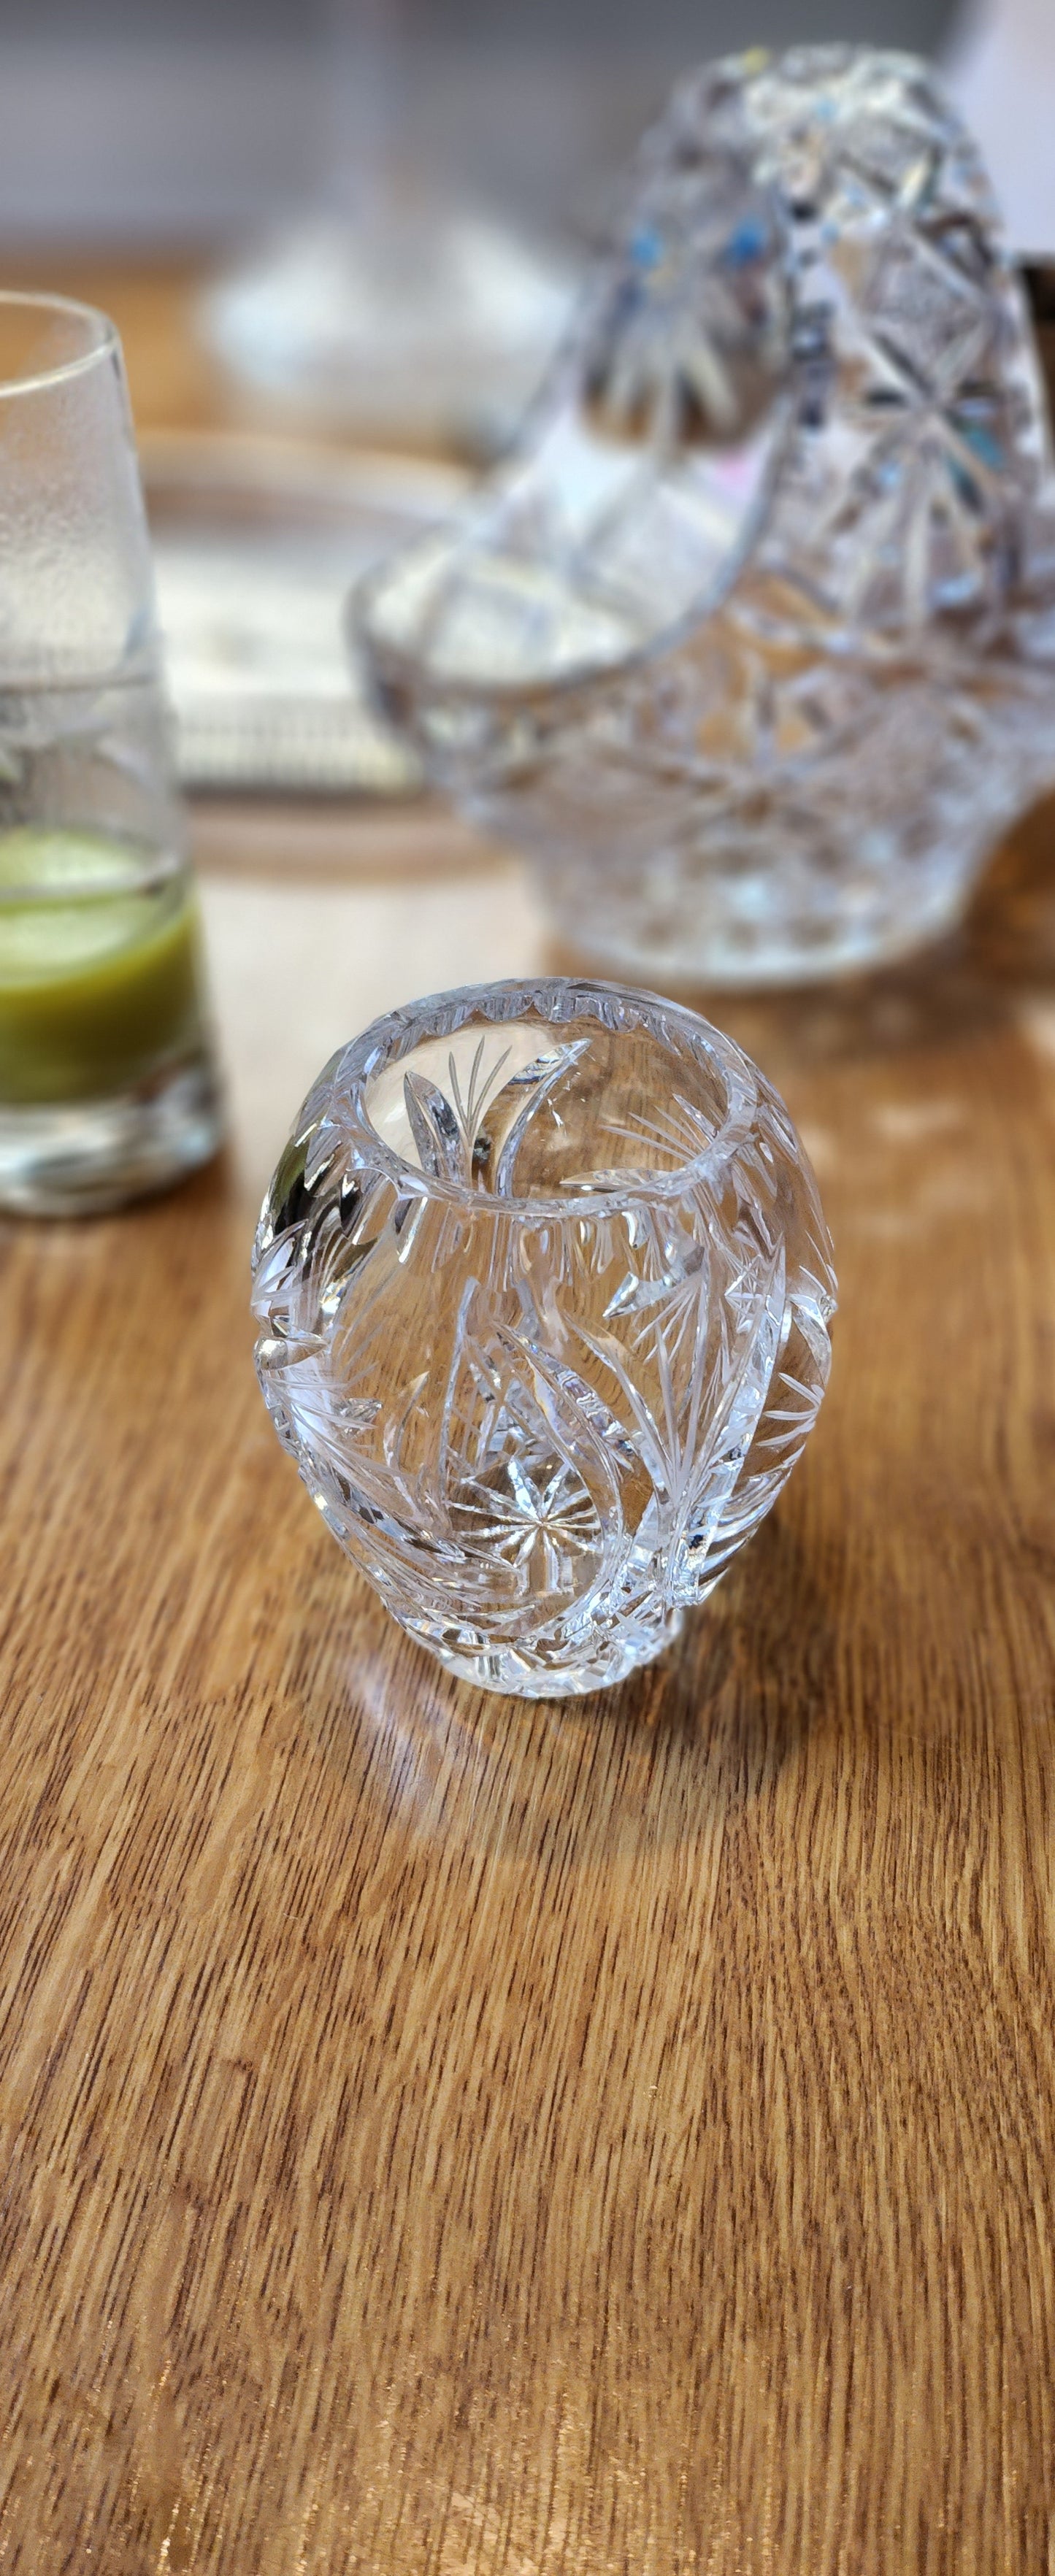 Waterford high quality crystal vase h 11cm